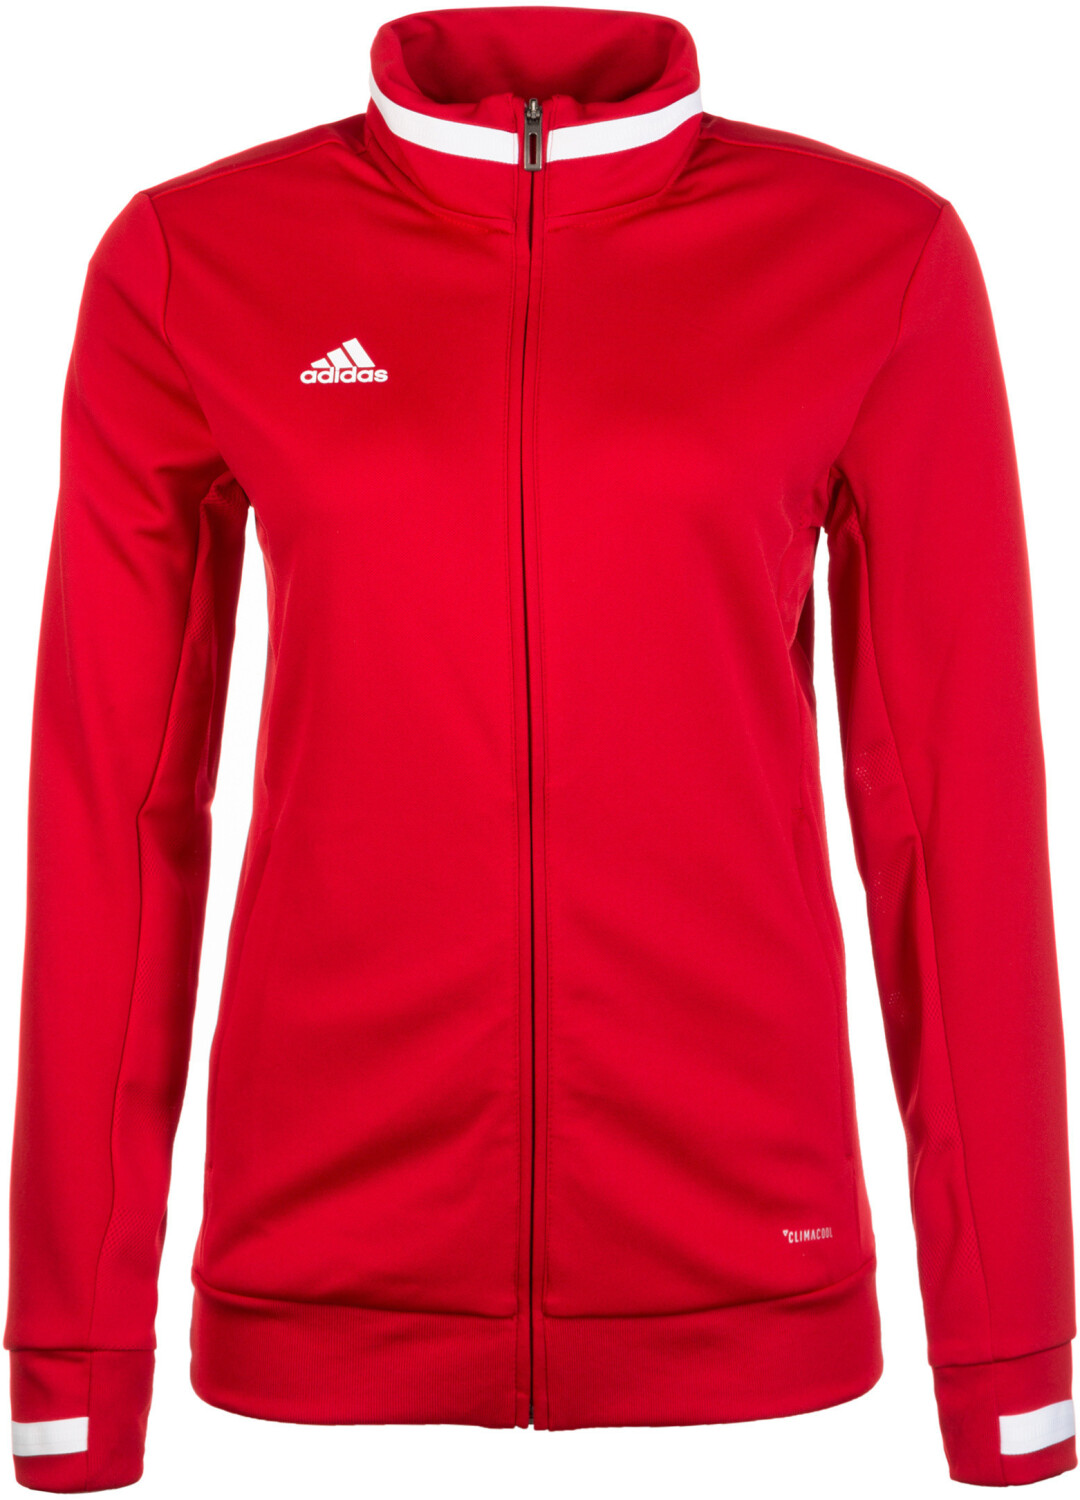 Adidas Team 19 Track Jacket Women power red/white